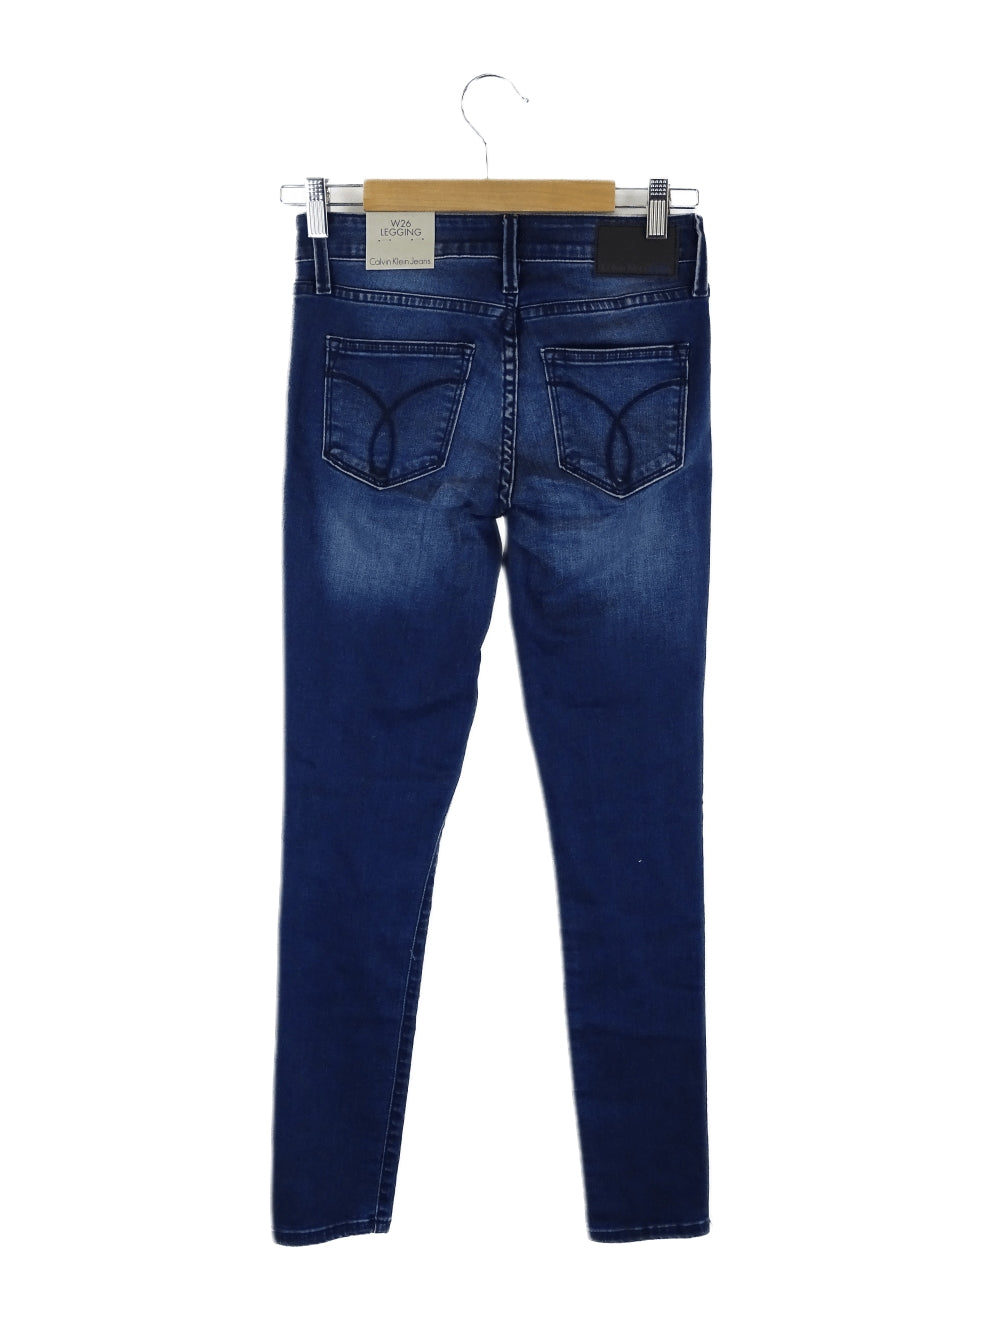 Calvin Klein Blue Stretch Jeans 26